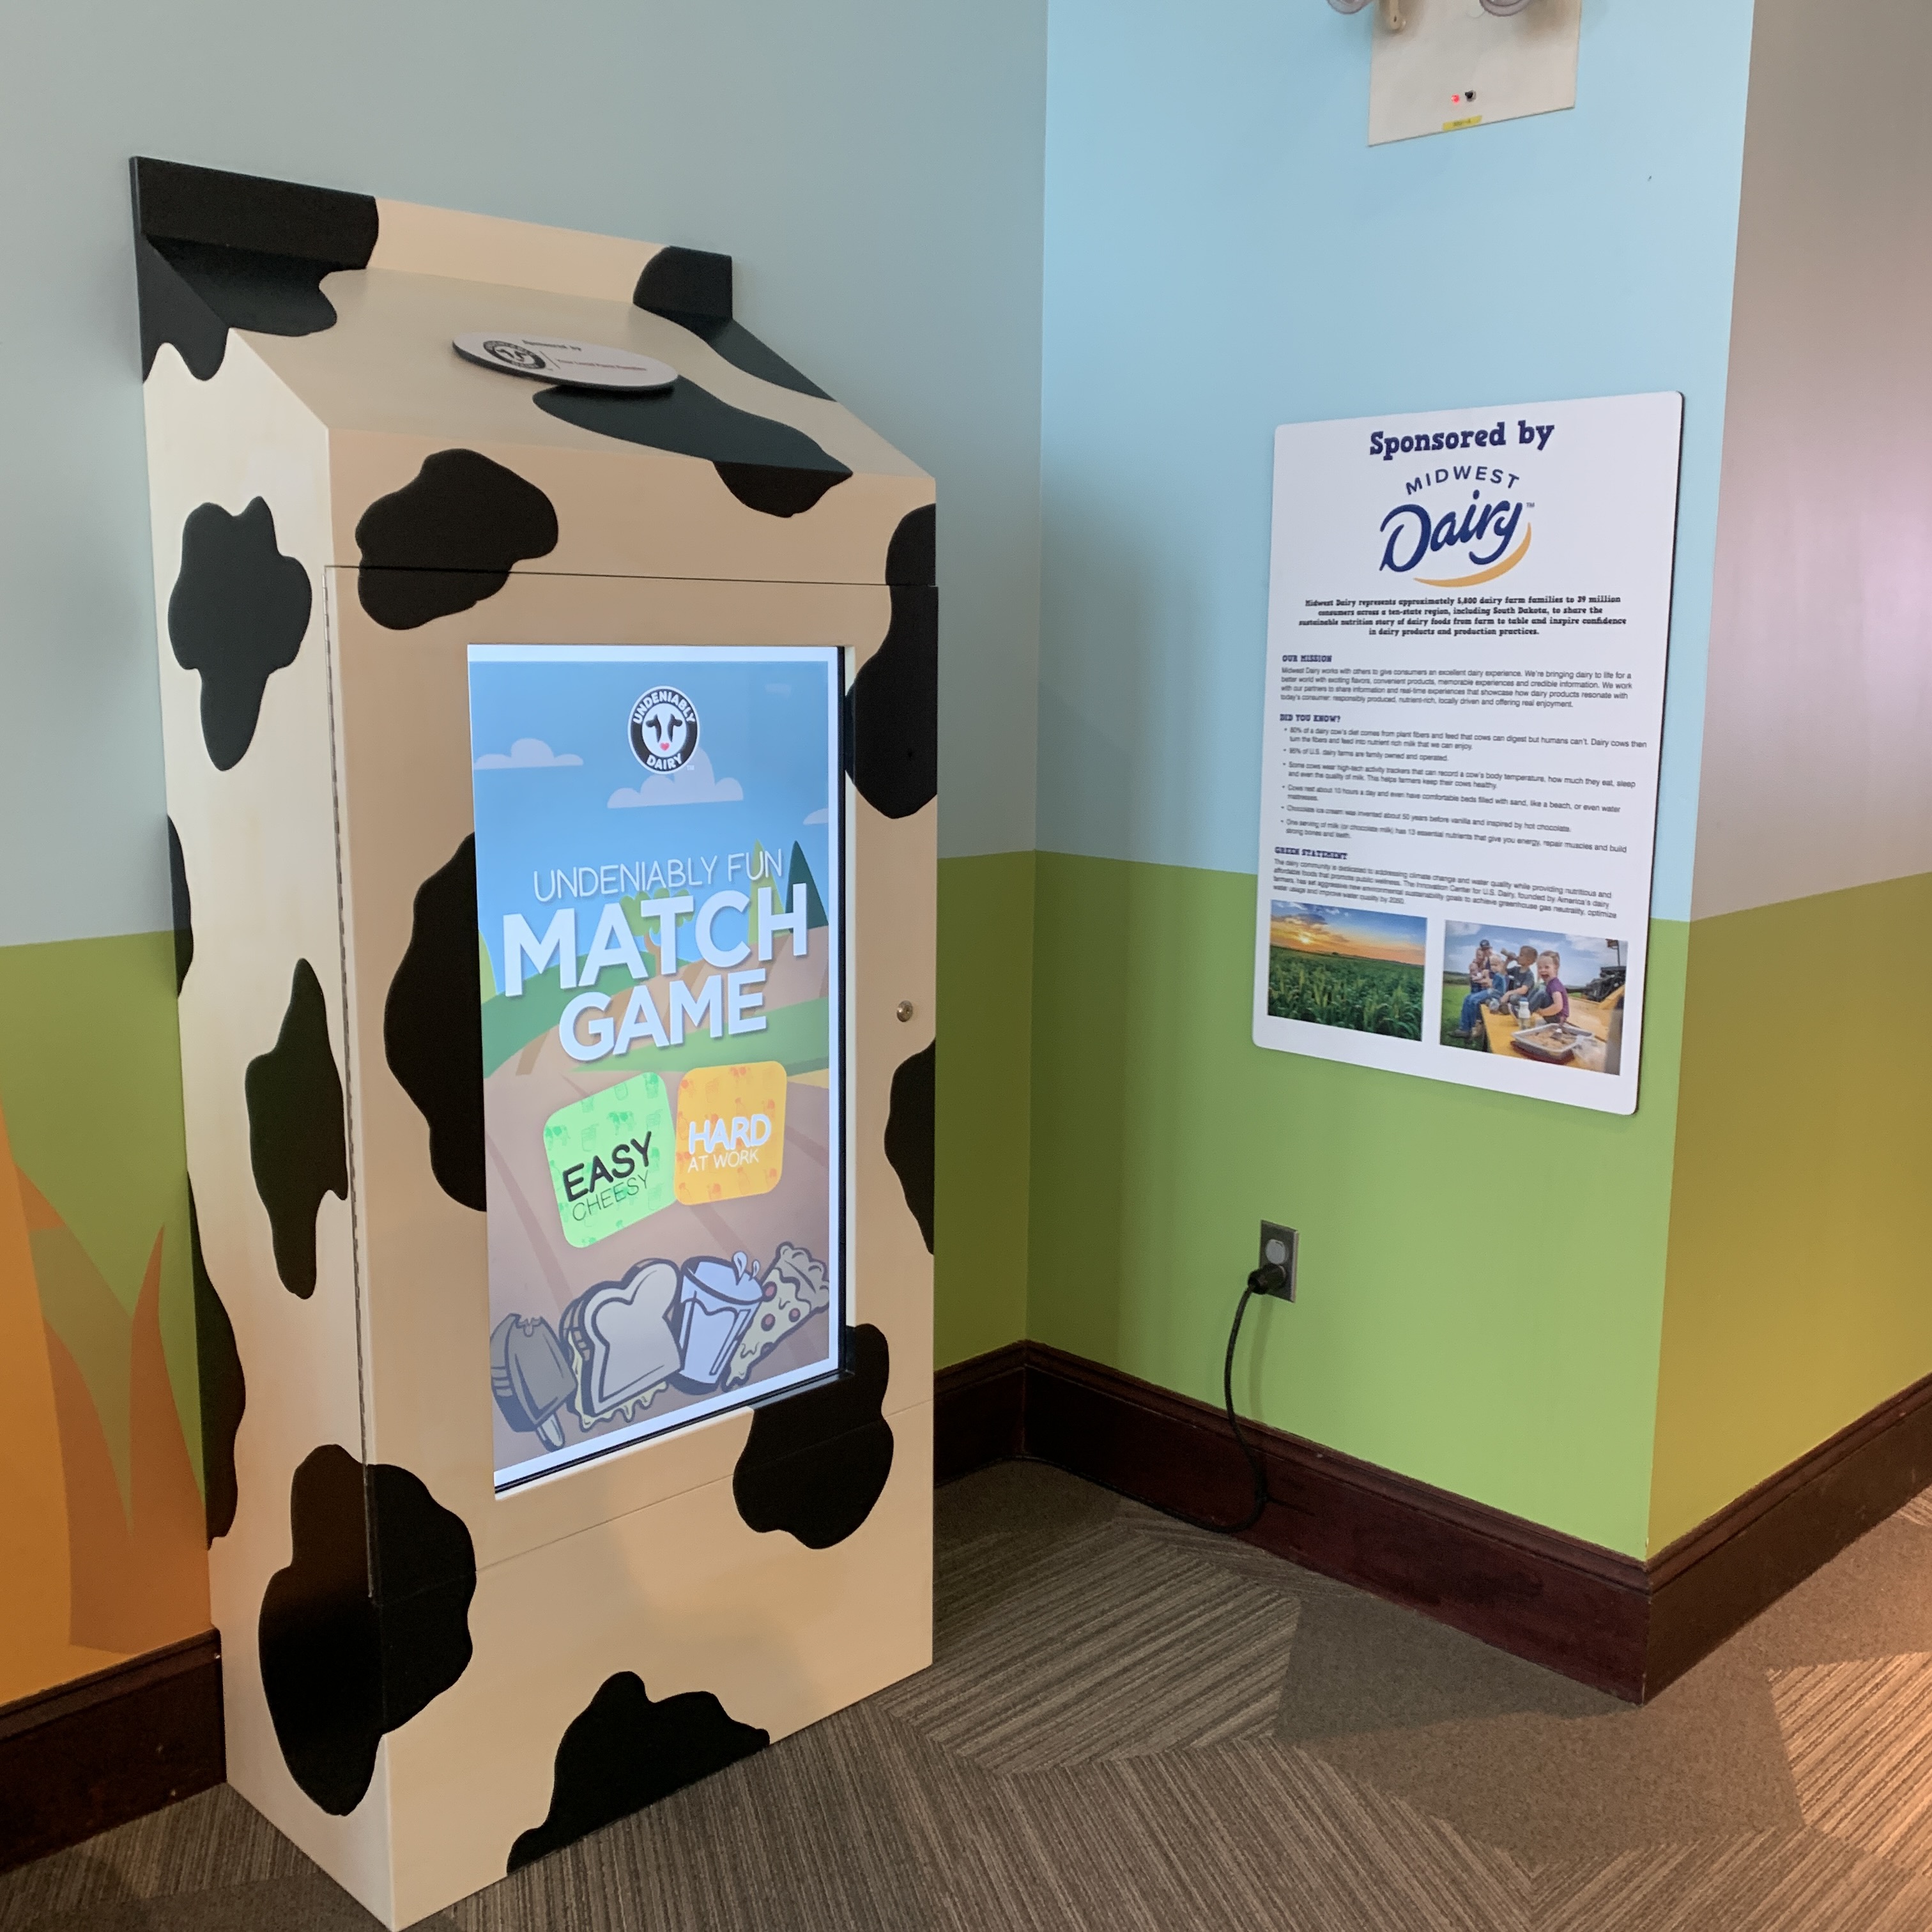 Midwest Dairy exhibit